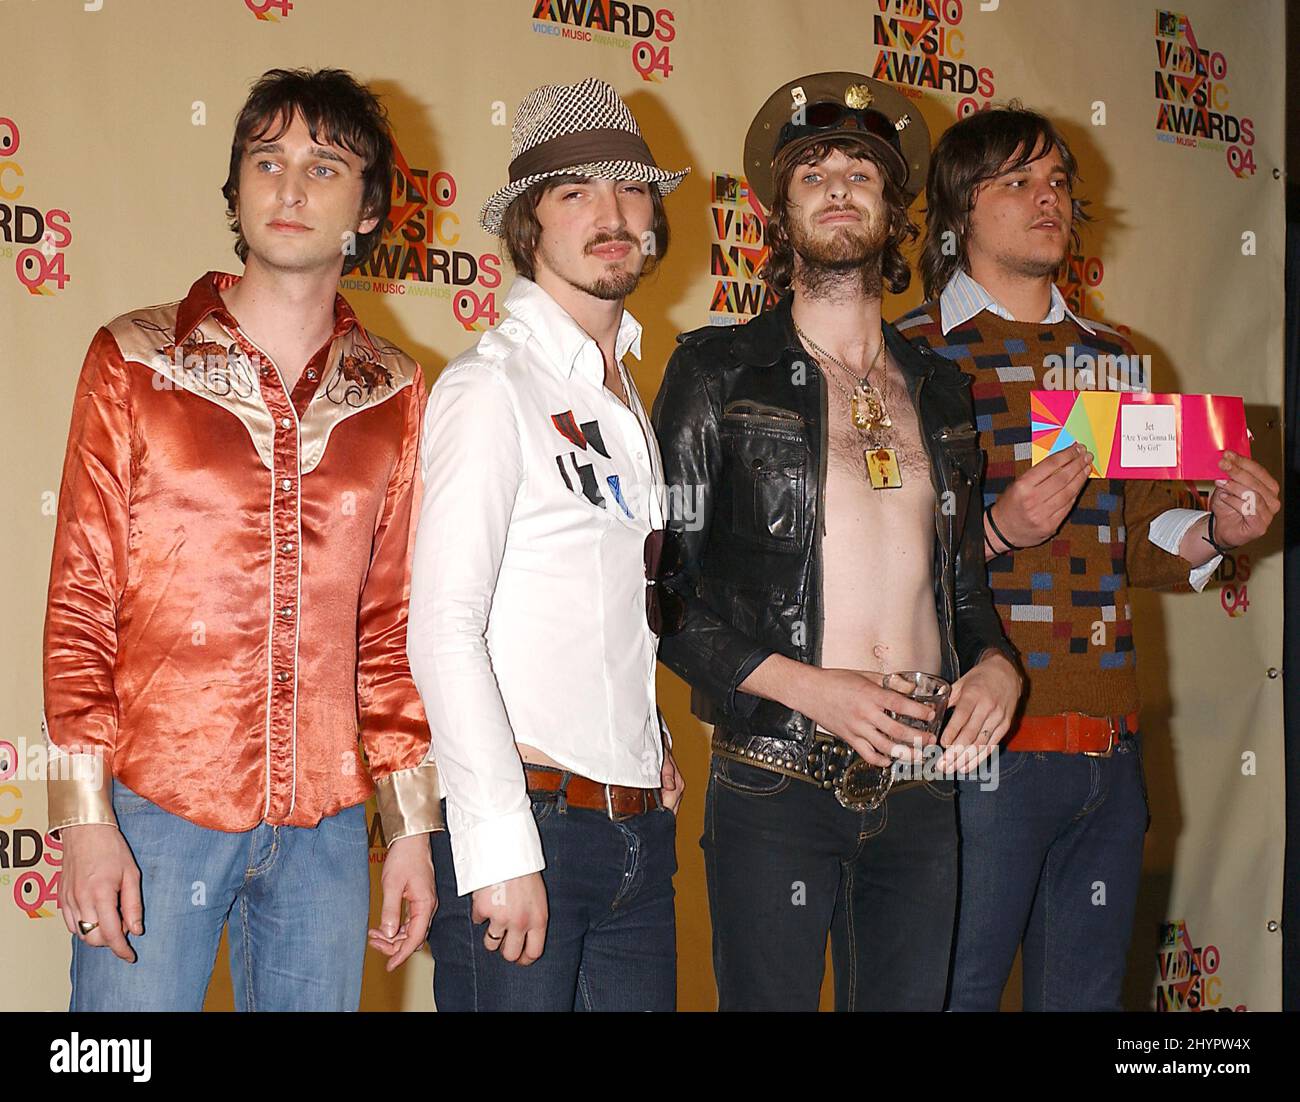 Jet partecipa ai MTV Music Video Awards 2004 a Miami, Florida. Foto: UK Stampa Foto Stock